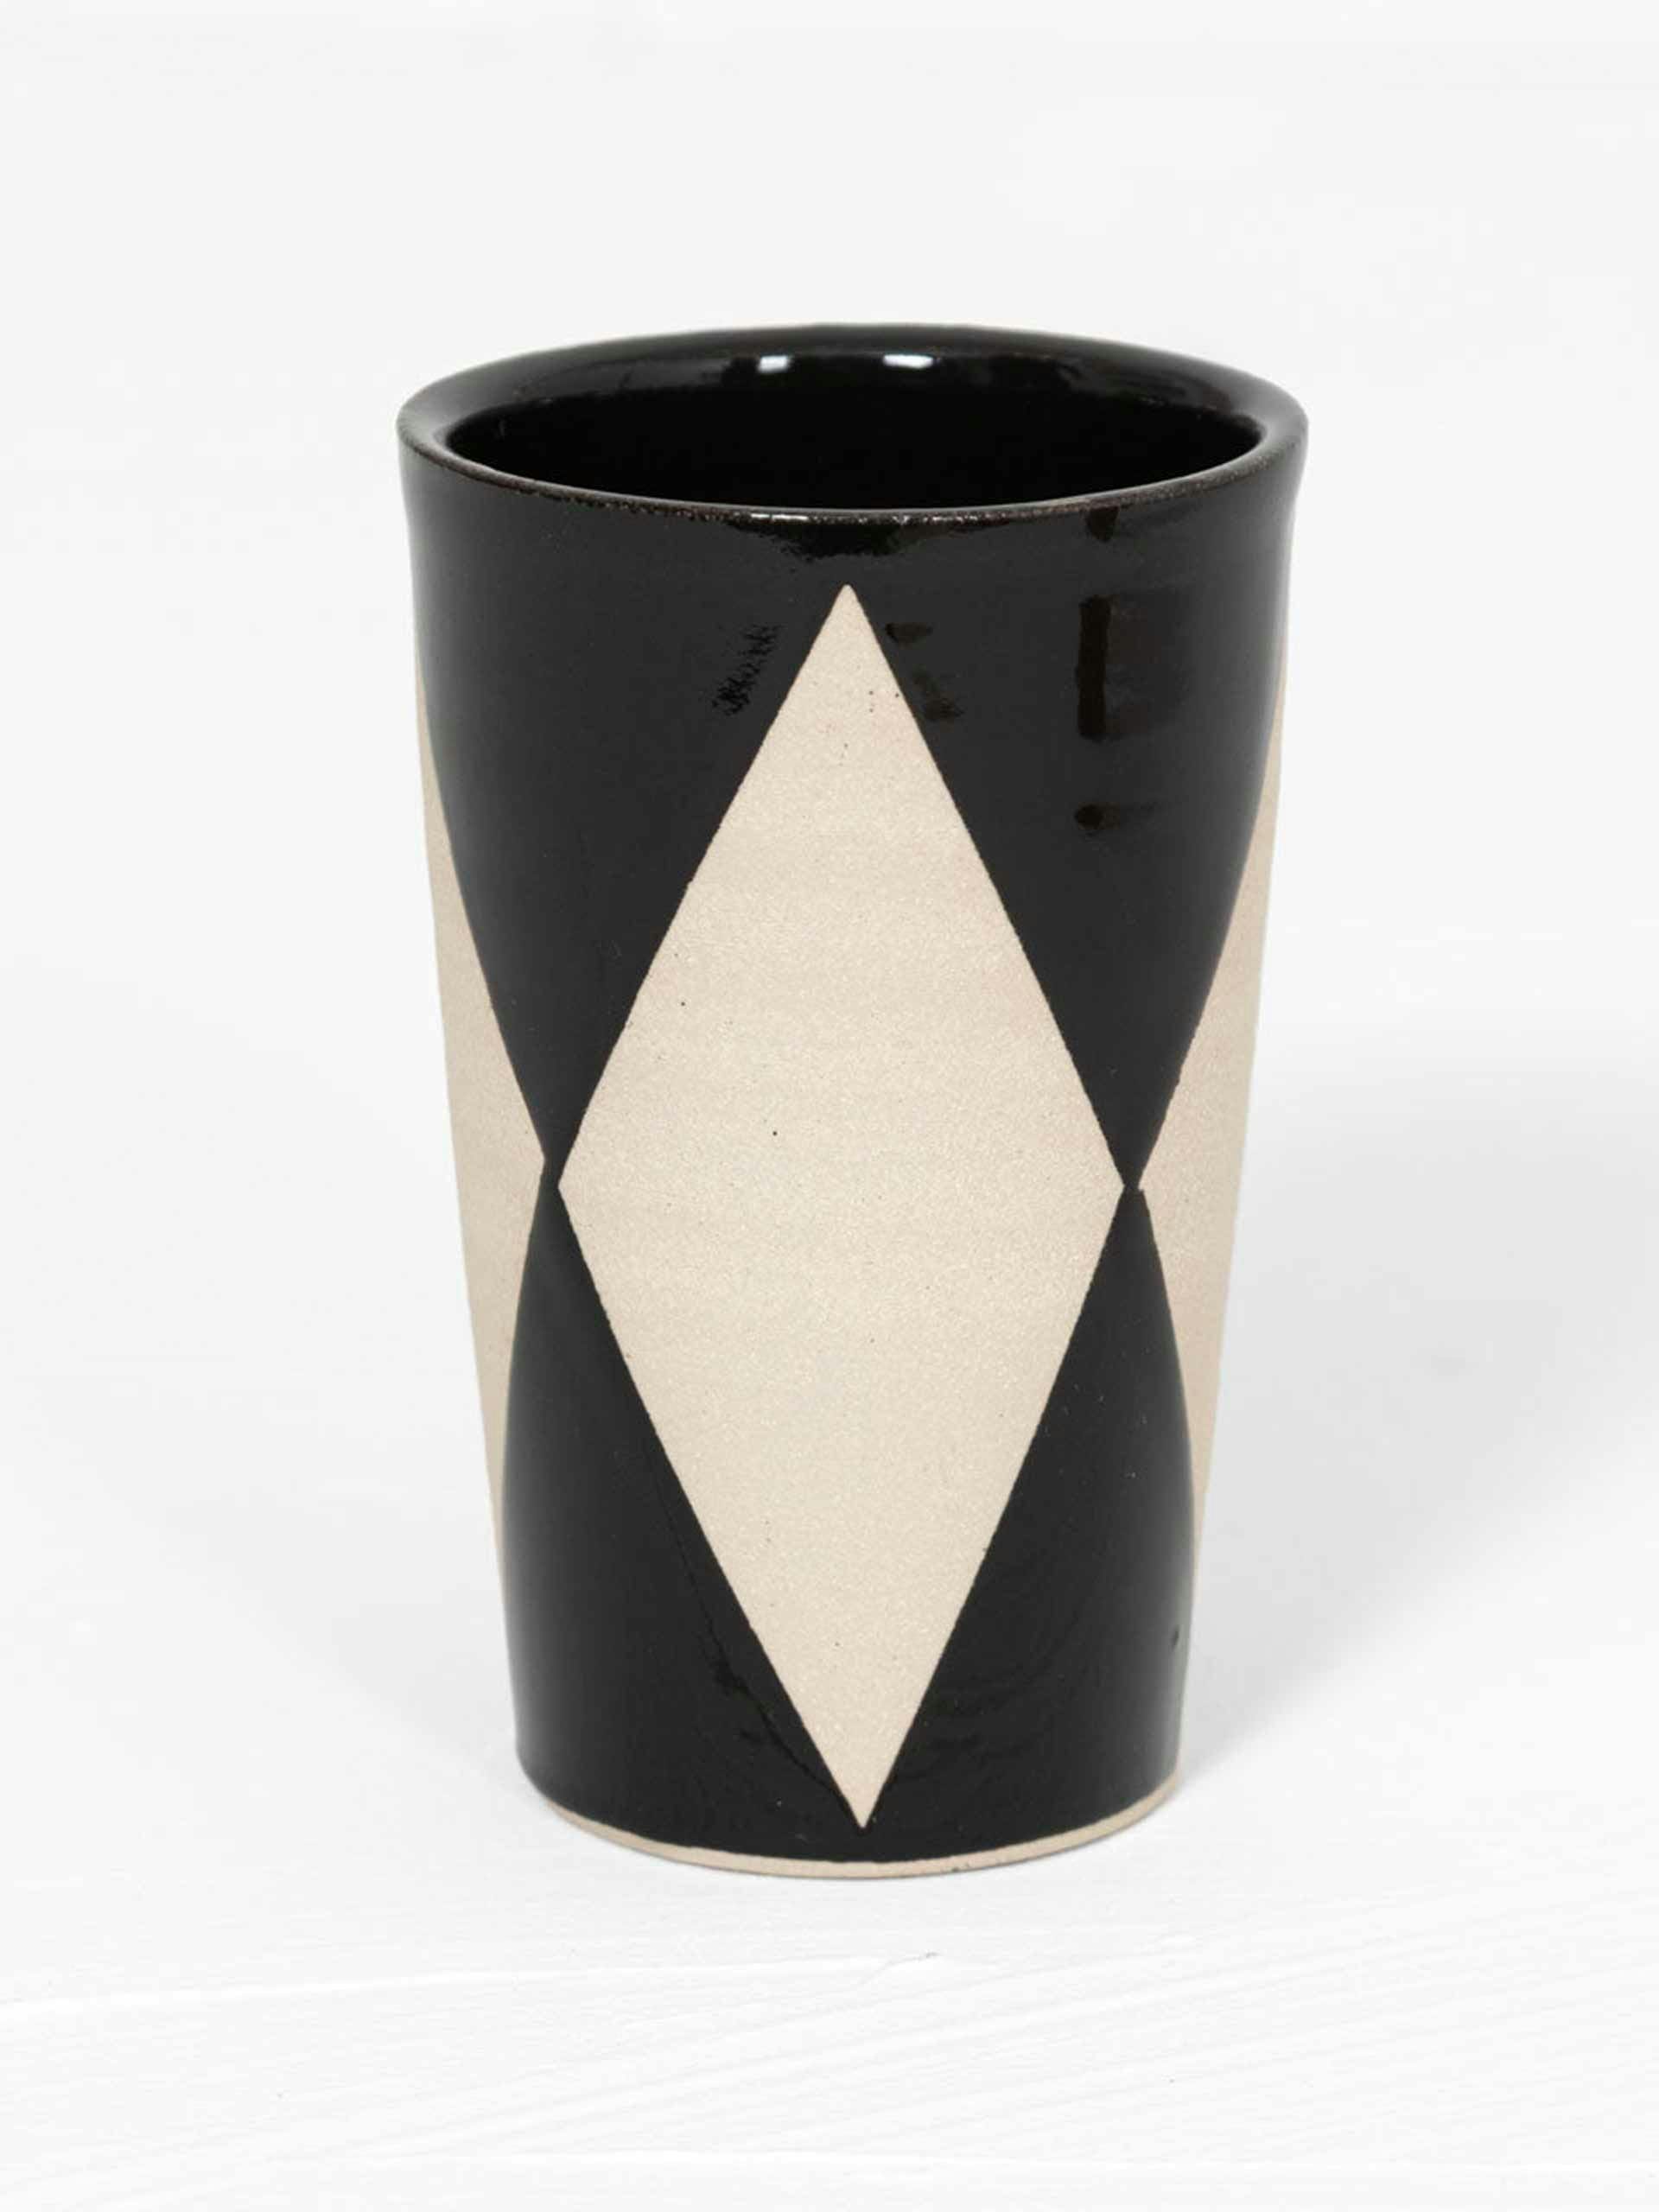 Black diamond patterned cup